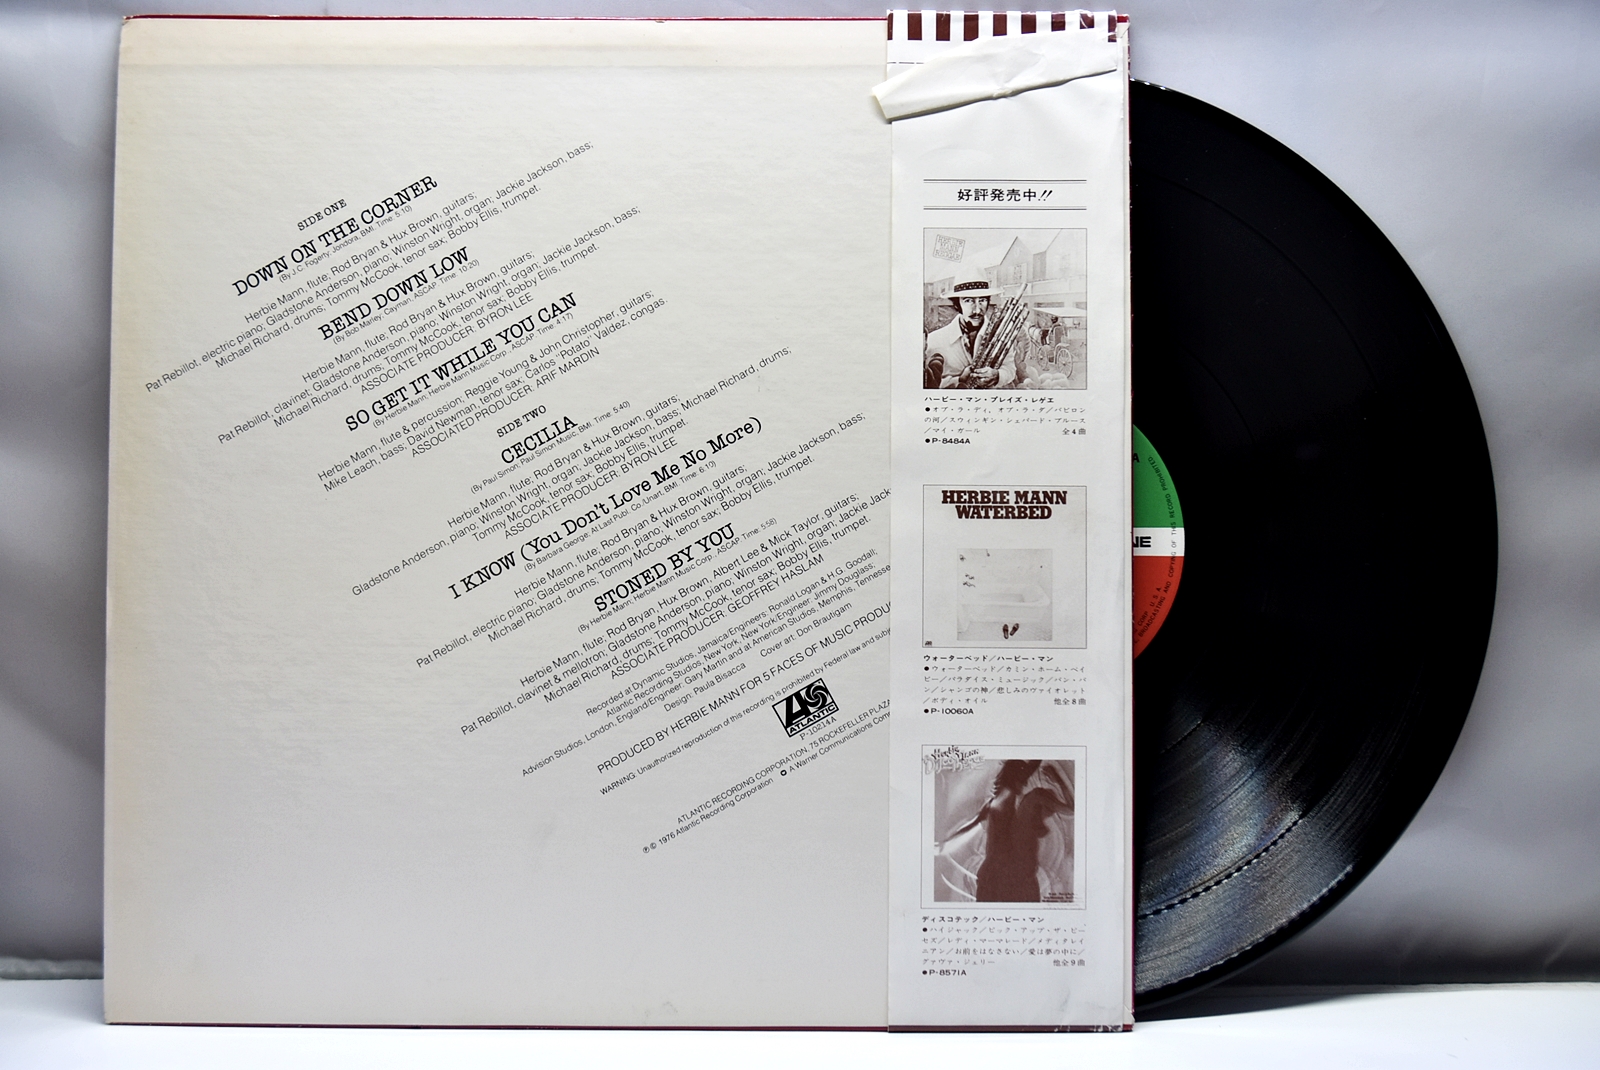 Herbie Mann [허비 만] – Reggae II - 중고 수입 오리지널 아날로그 LP